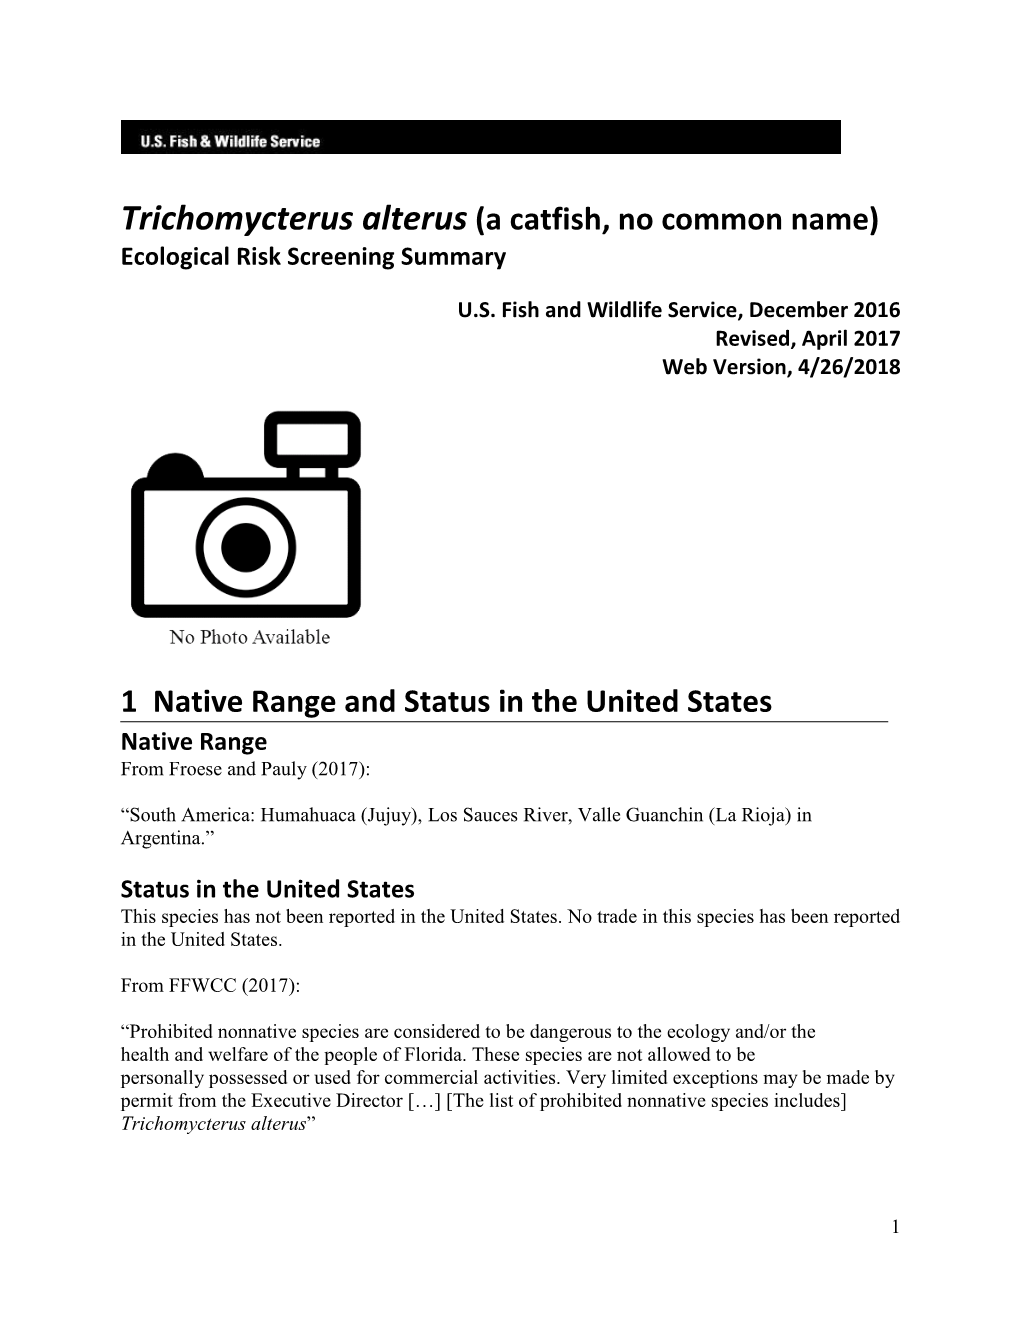 Trichomycterus Alterus (A Catfish, No Common Name) Ecological Risk Screening Summary